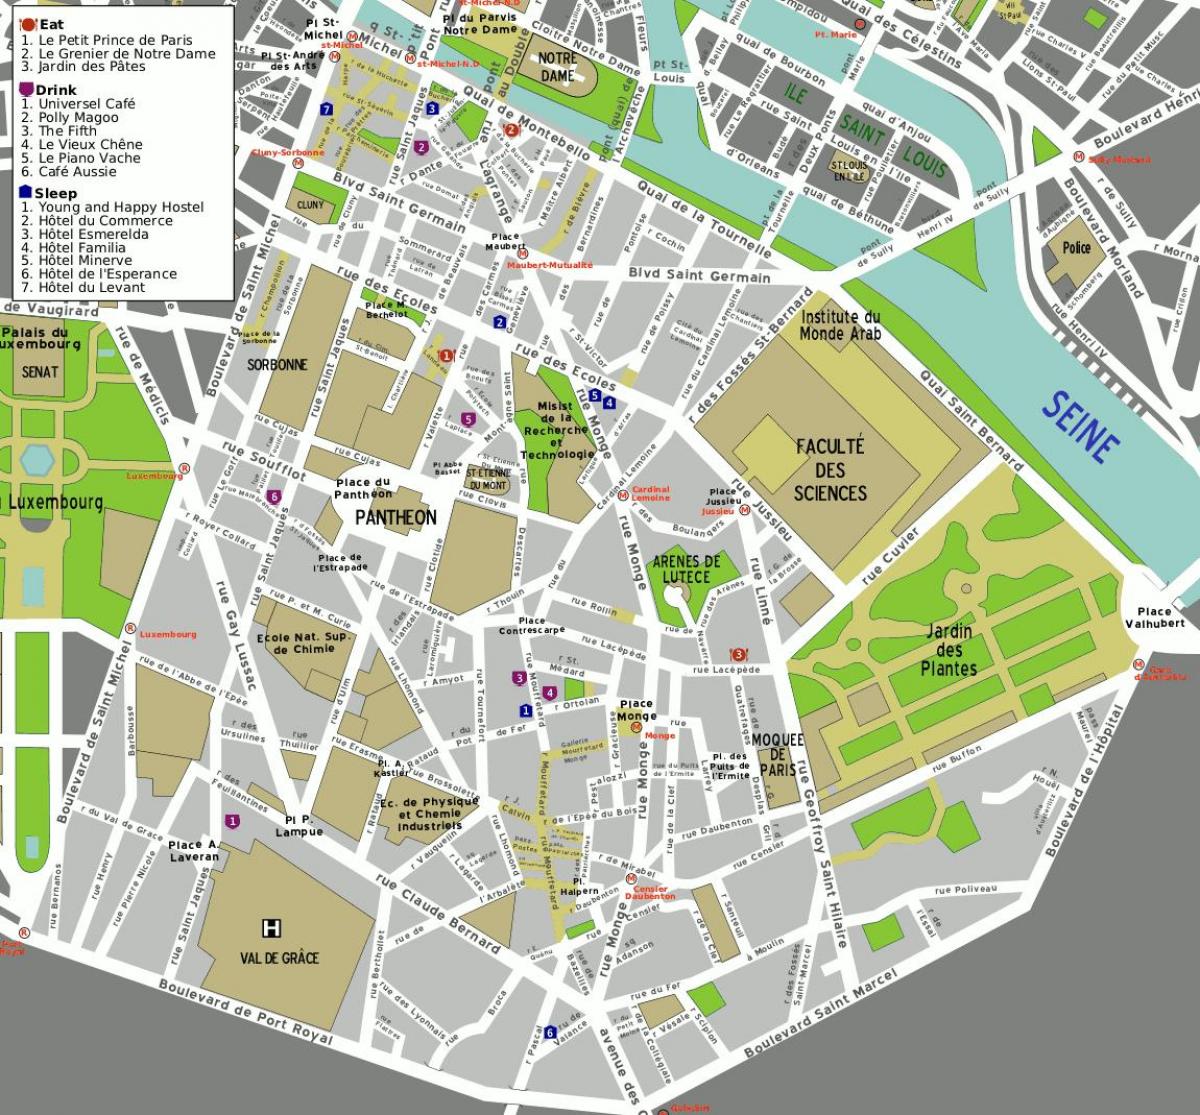 Peta ke-5 arrondissement Paris